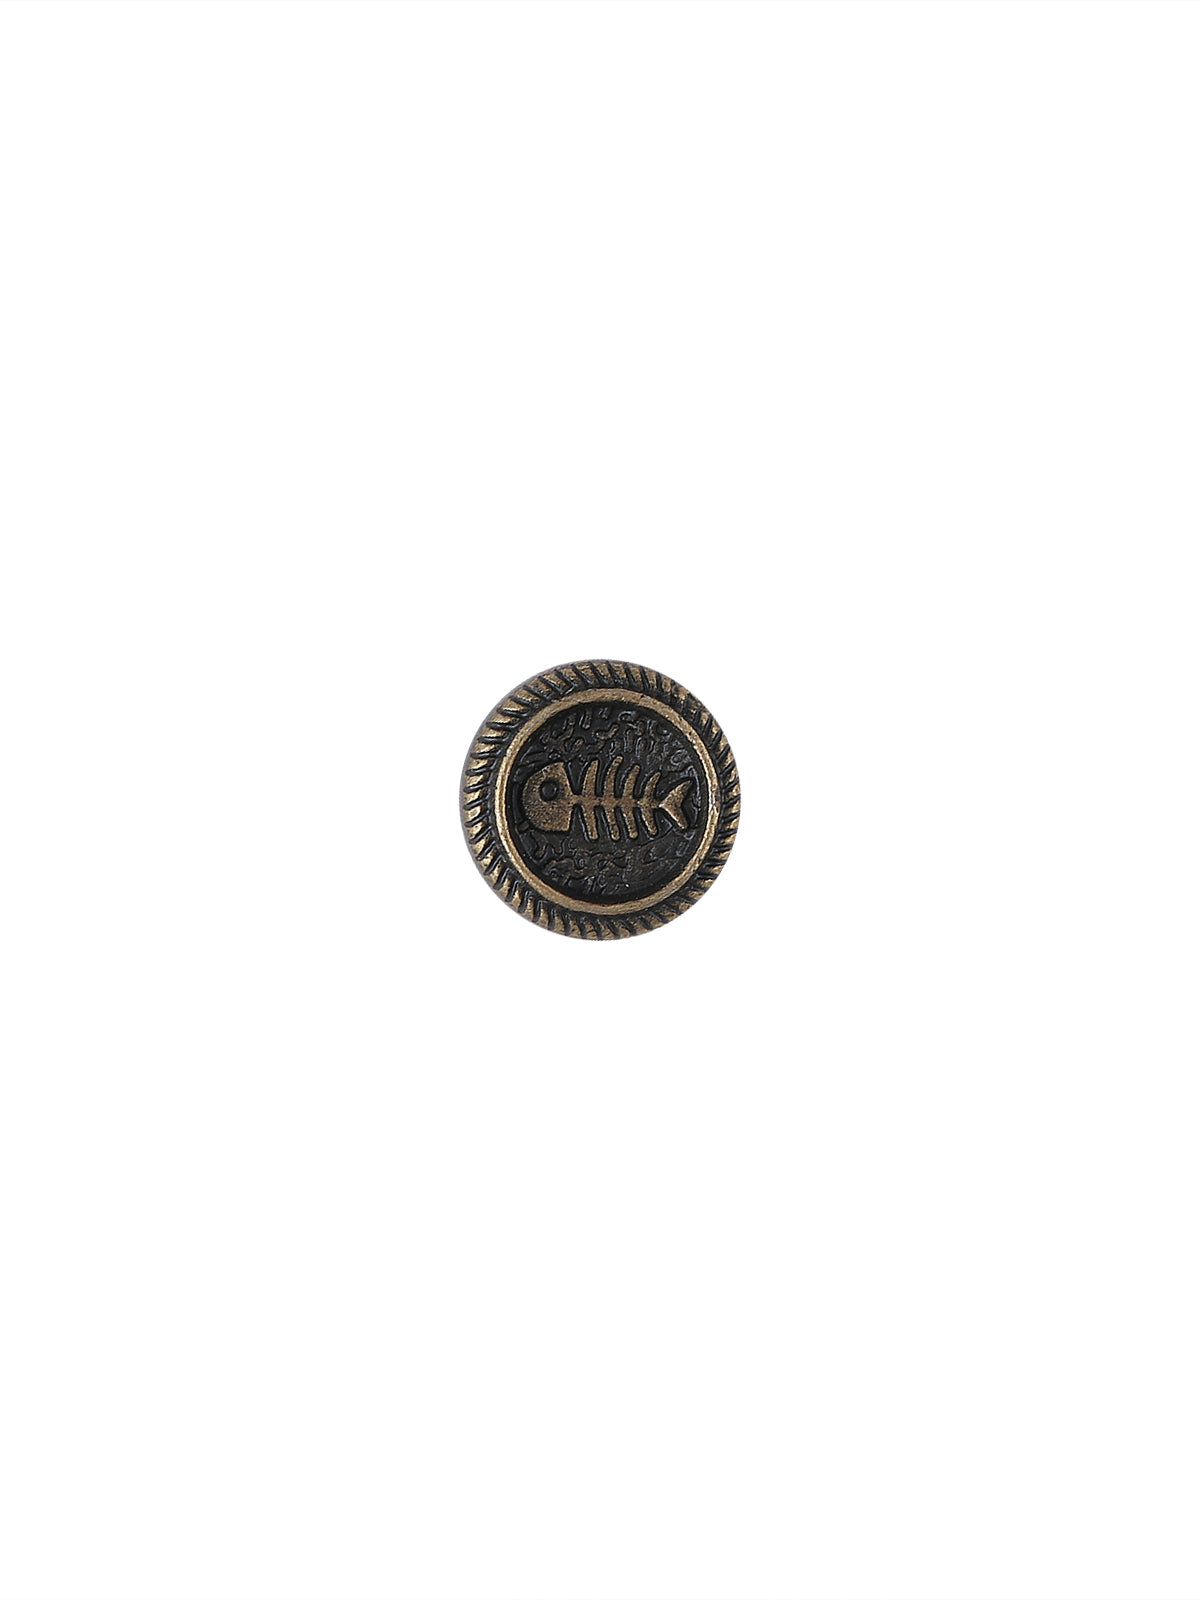 Engraved Round Shape 8mm (12L) Antique Brass Shirt/Kurta Downhole Metal Button